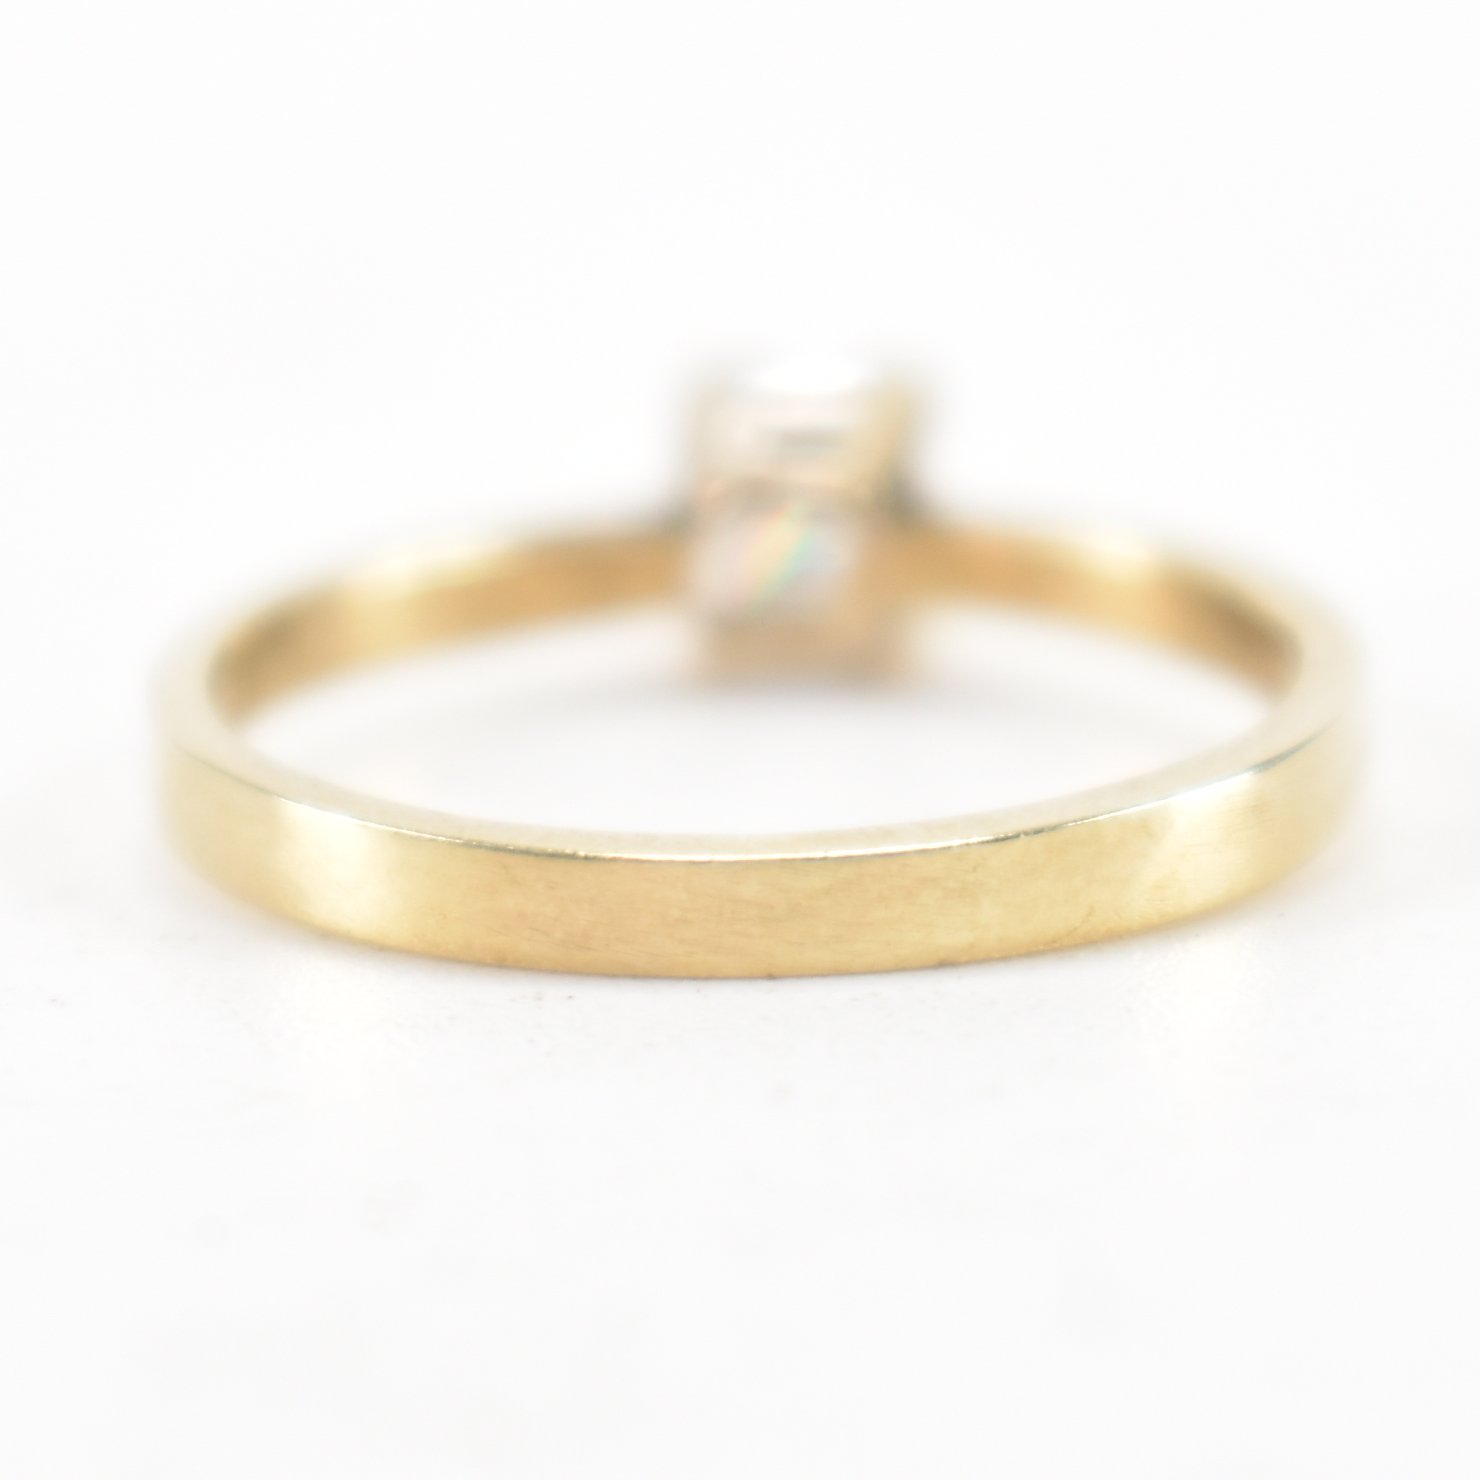 HALLMARKED 9CT GOLD & DIAMOND SINGLE STONE RING - Image 3 of 8